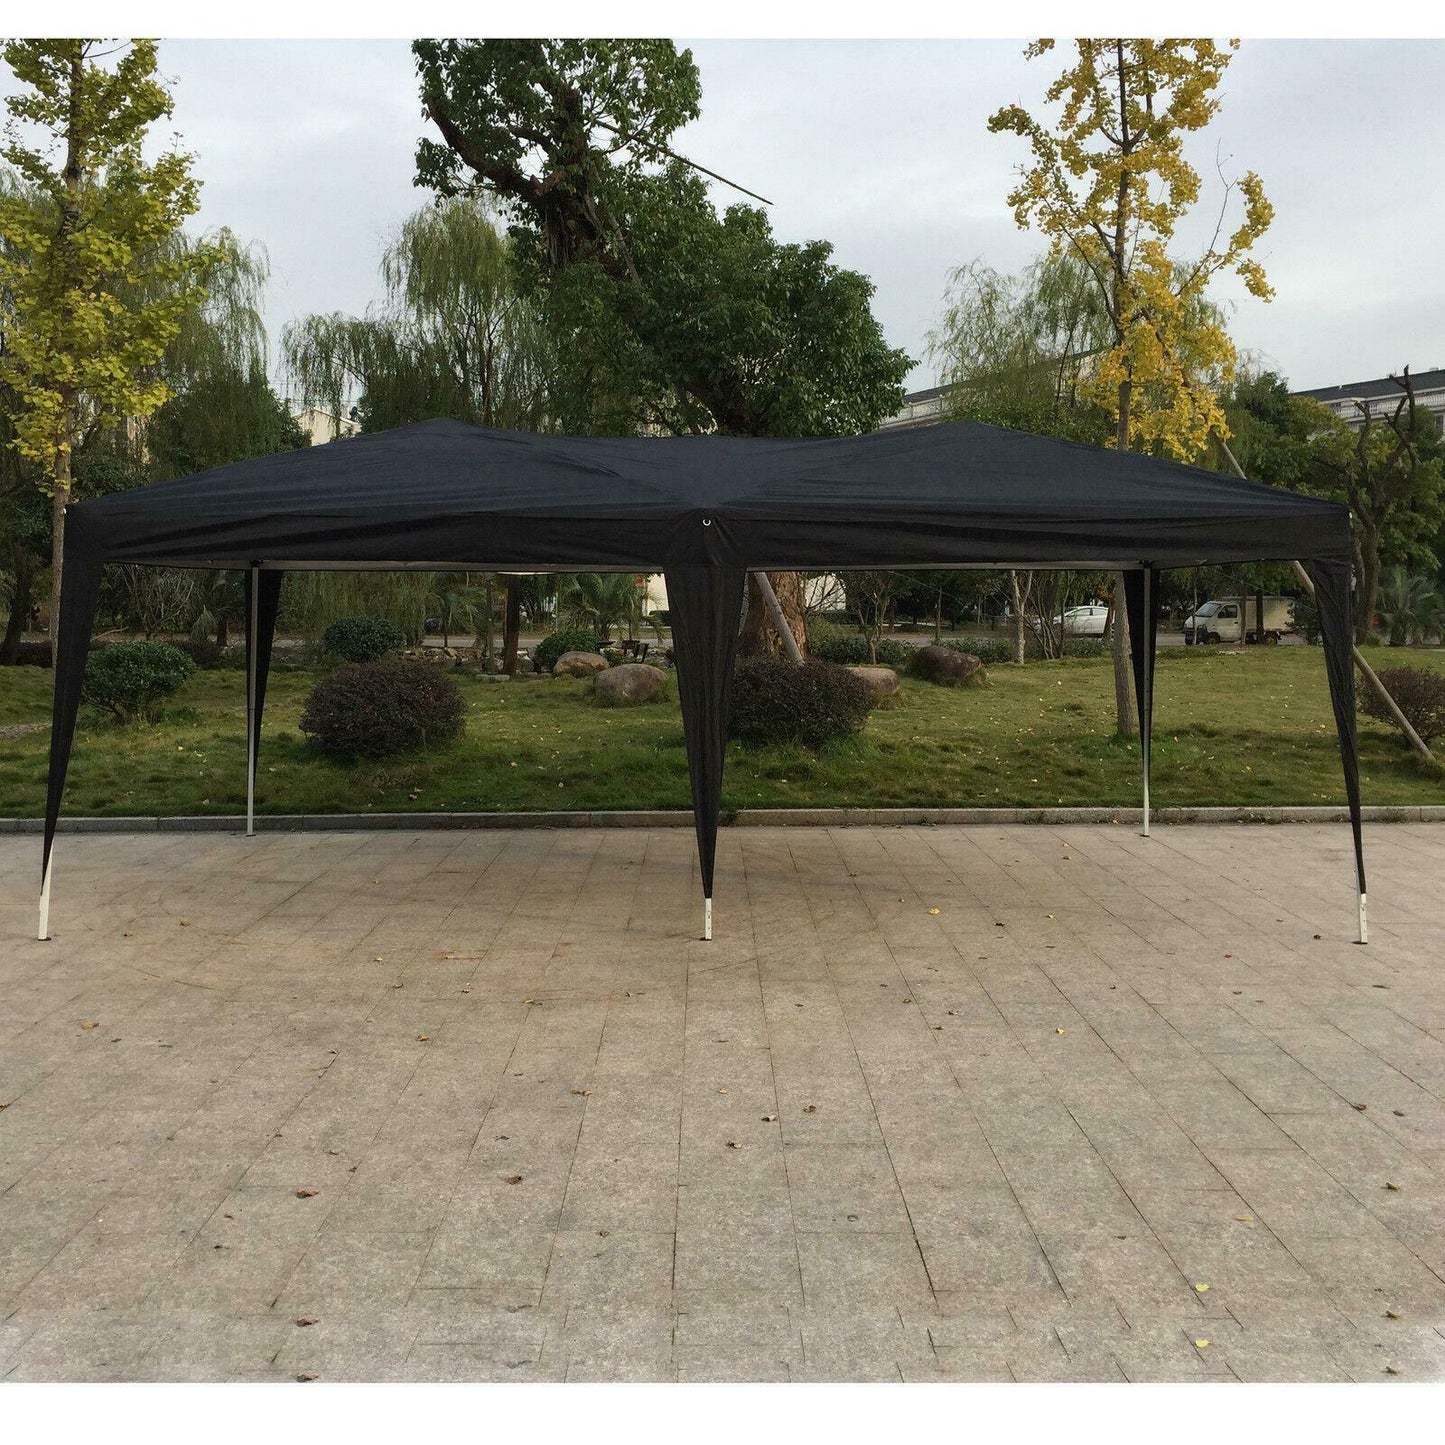 10'x 20' Outdoor Tent - Ez Pop Up Wedding Party Tent - Gazebo Canopy Tent - Marquee Tent 6 Walls